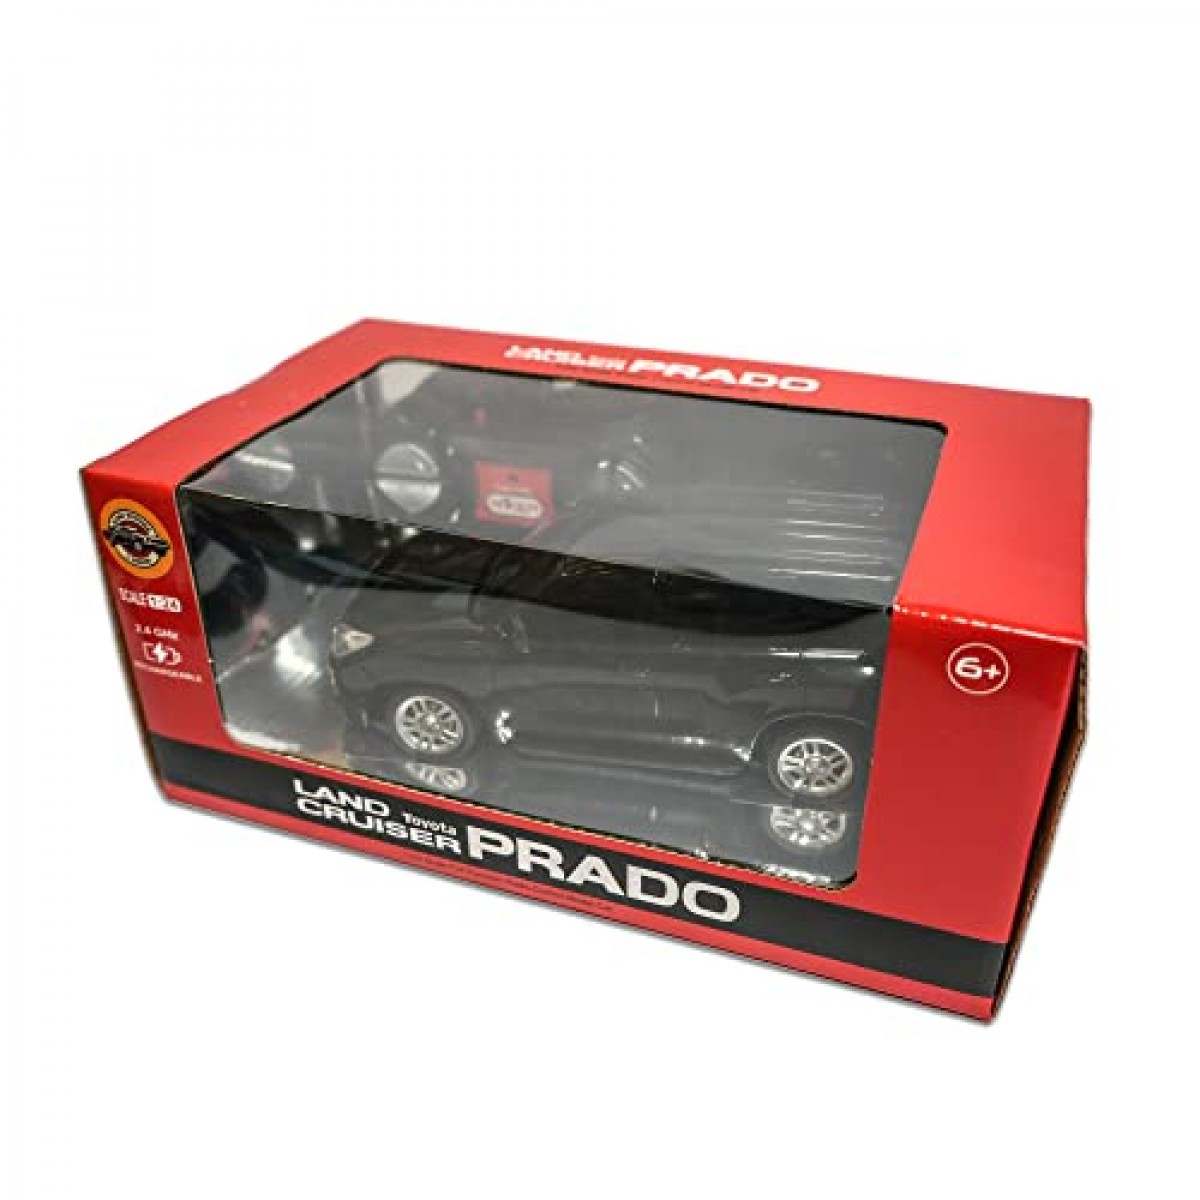 Road Burner Rechargable Remote Control Car for Kids Toyata Prado Full Function, 1:24 Scale Pack of 1, Black, Age 6Y+